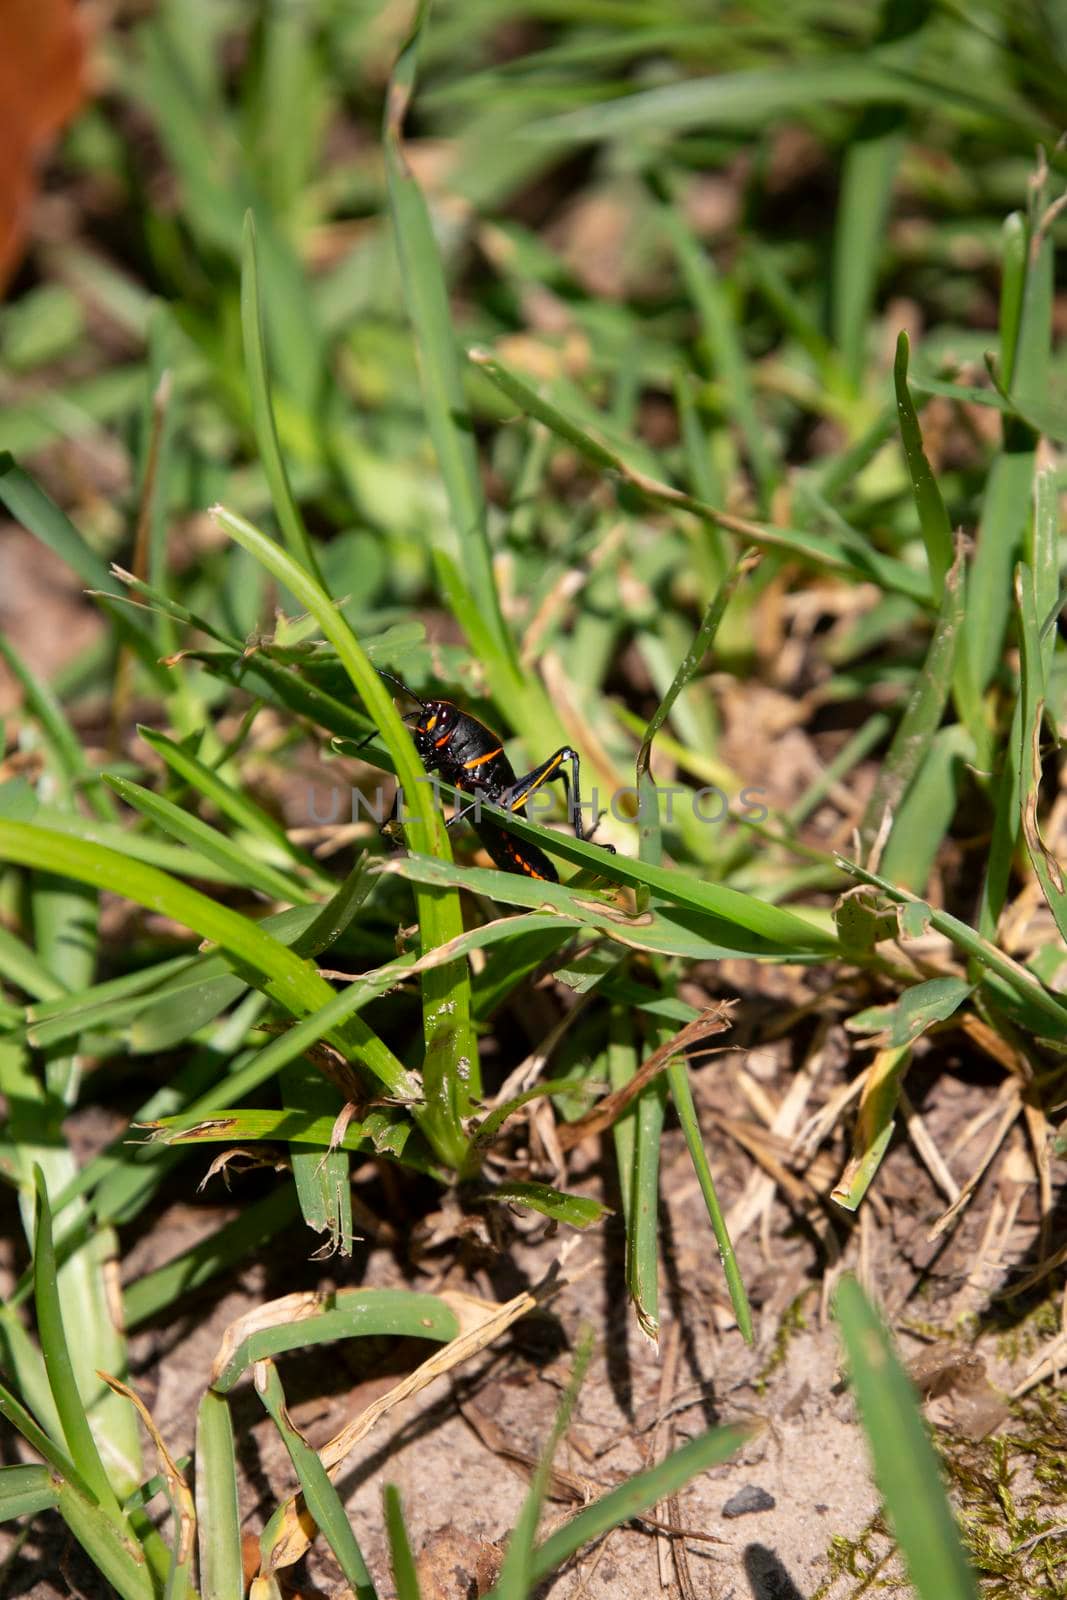 Southeastern lubber grasshopper (Romalea microptera) climbing a blade of grass